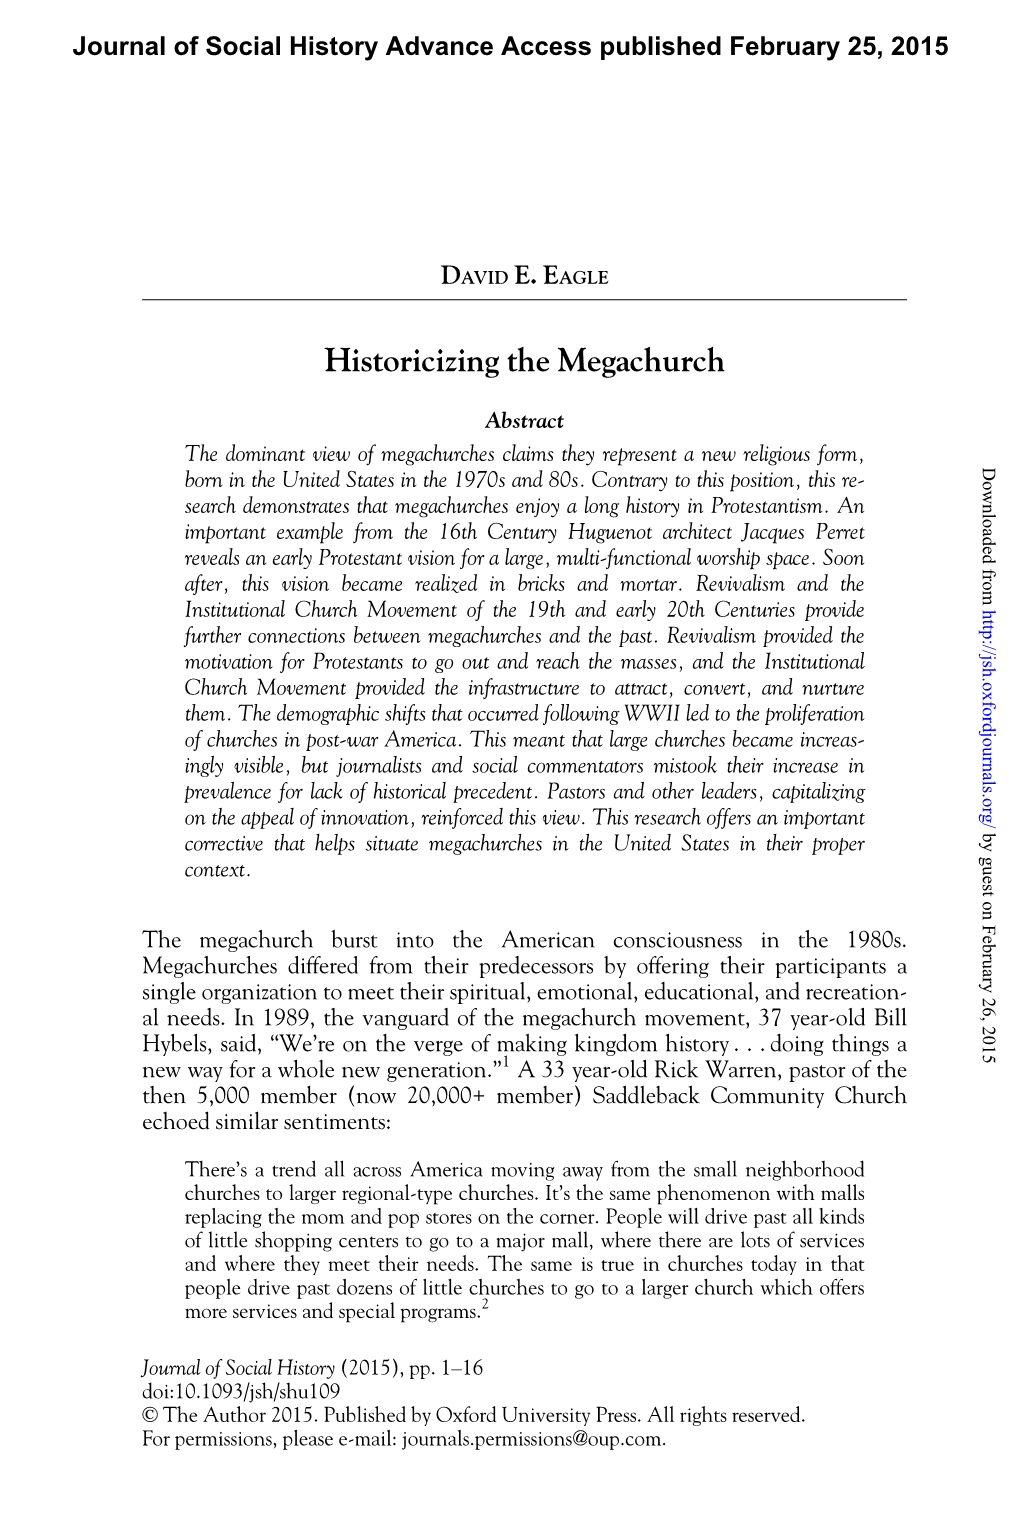 Historicizing the Megachurch